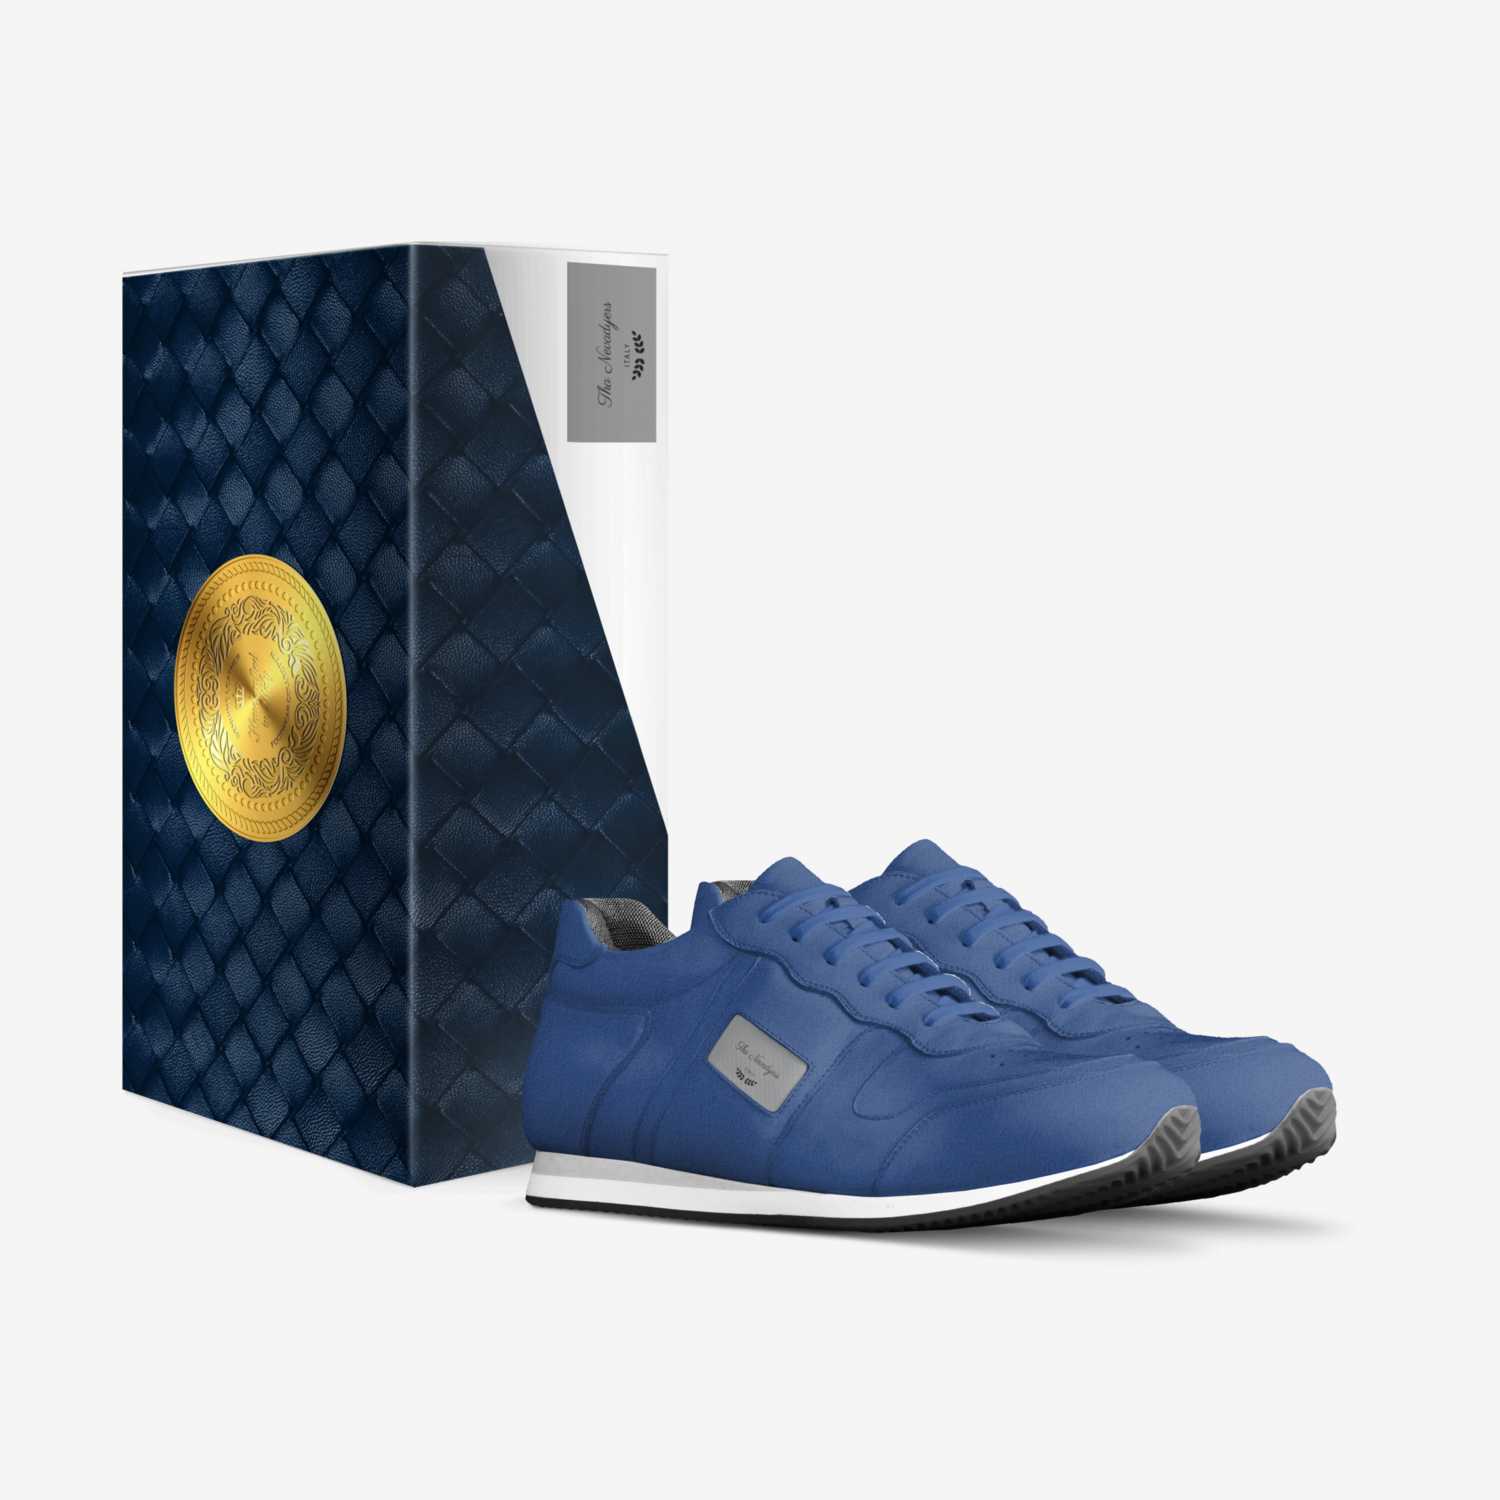 Money Racer I "blu custom made in Italy shoes by Galatikz Dixon | Box view